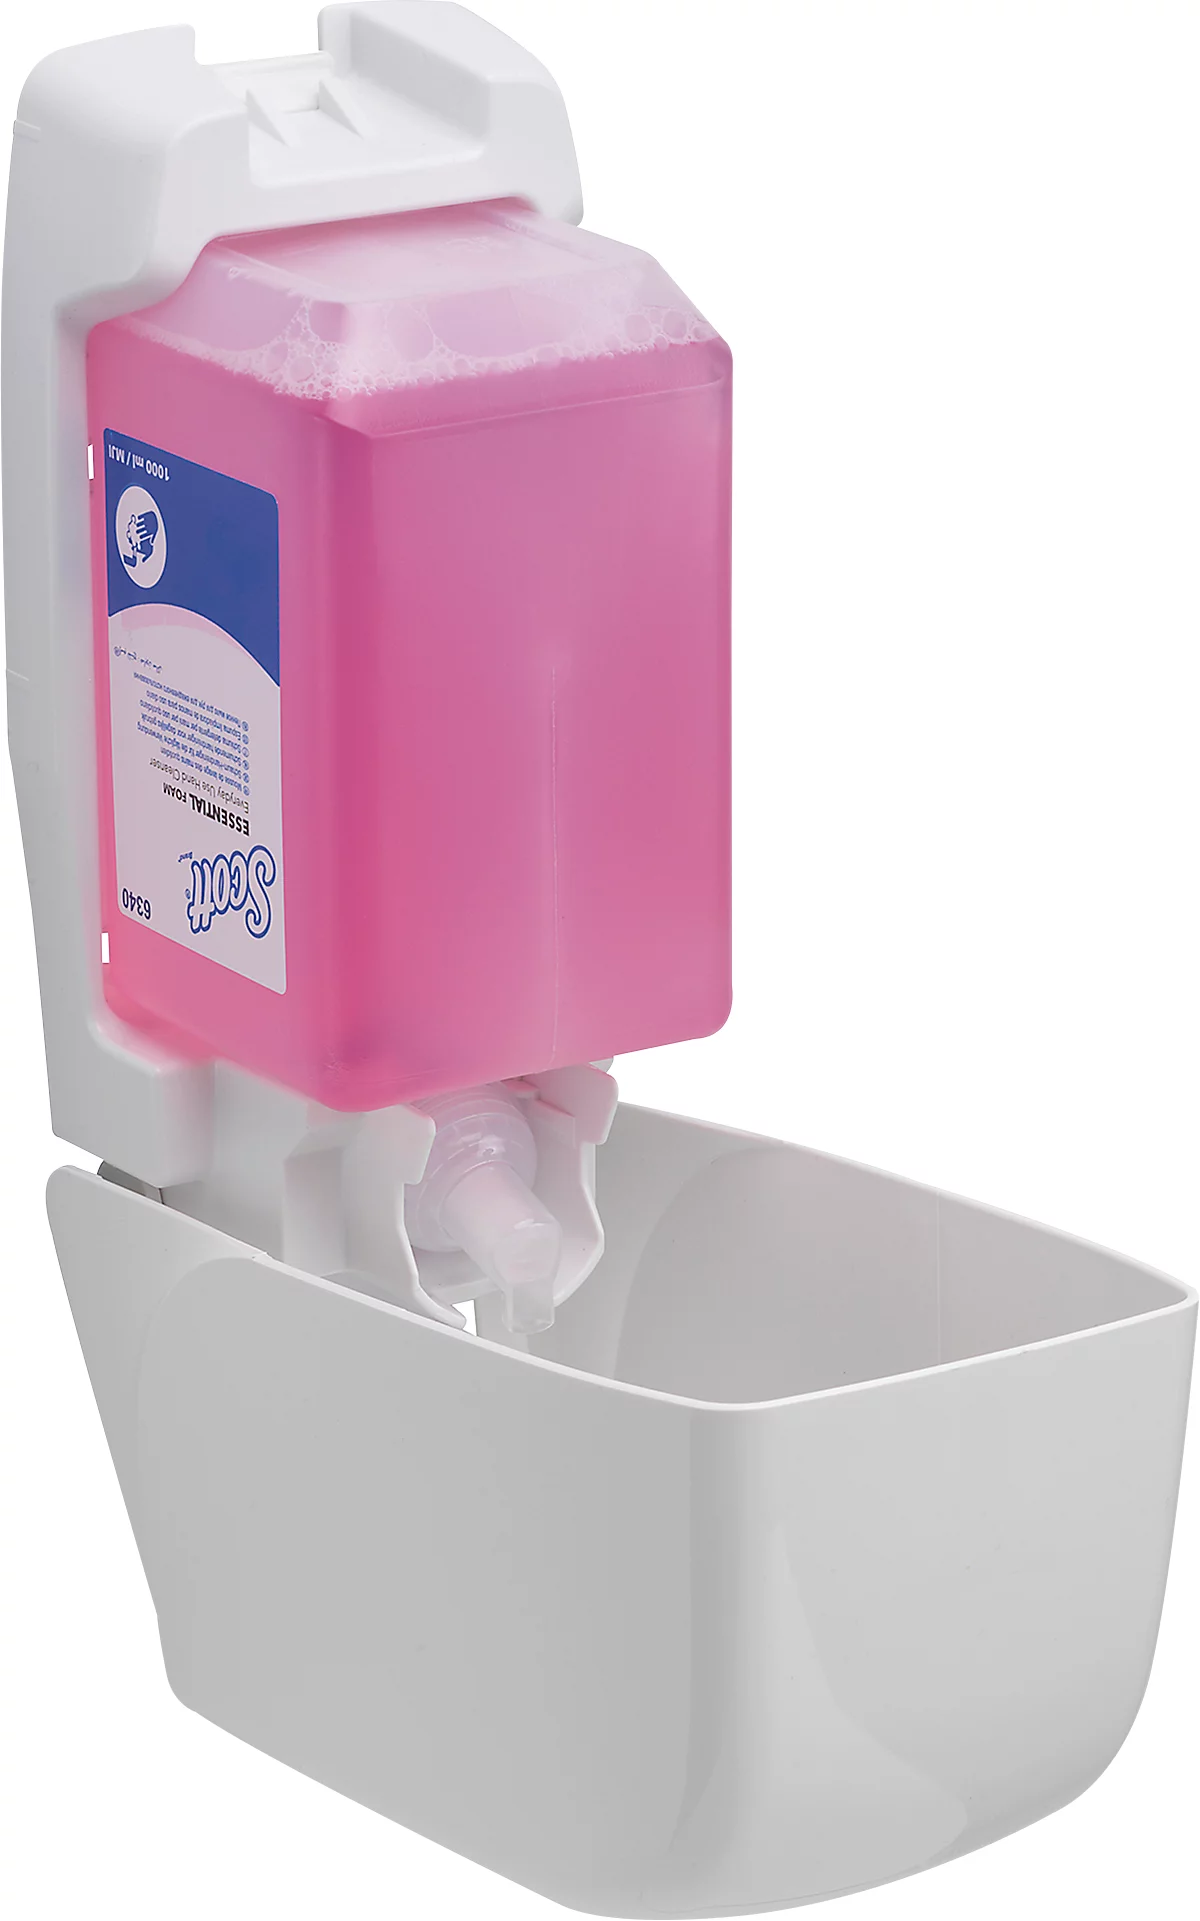 Kleenex® Jabón espumoso 6340, alto rendimiento, perfumado, 1 litro, rosa